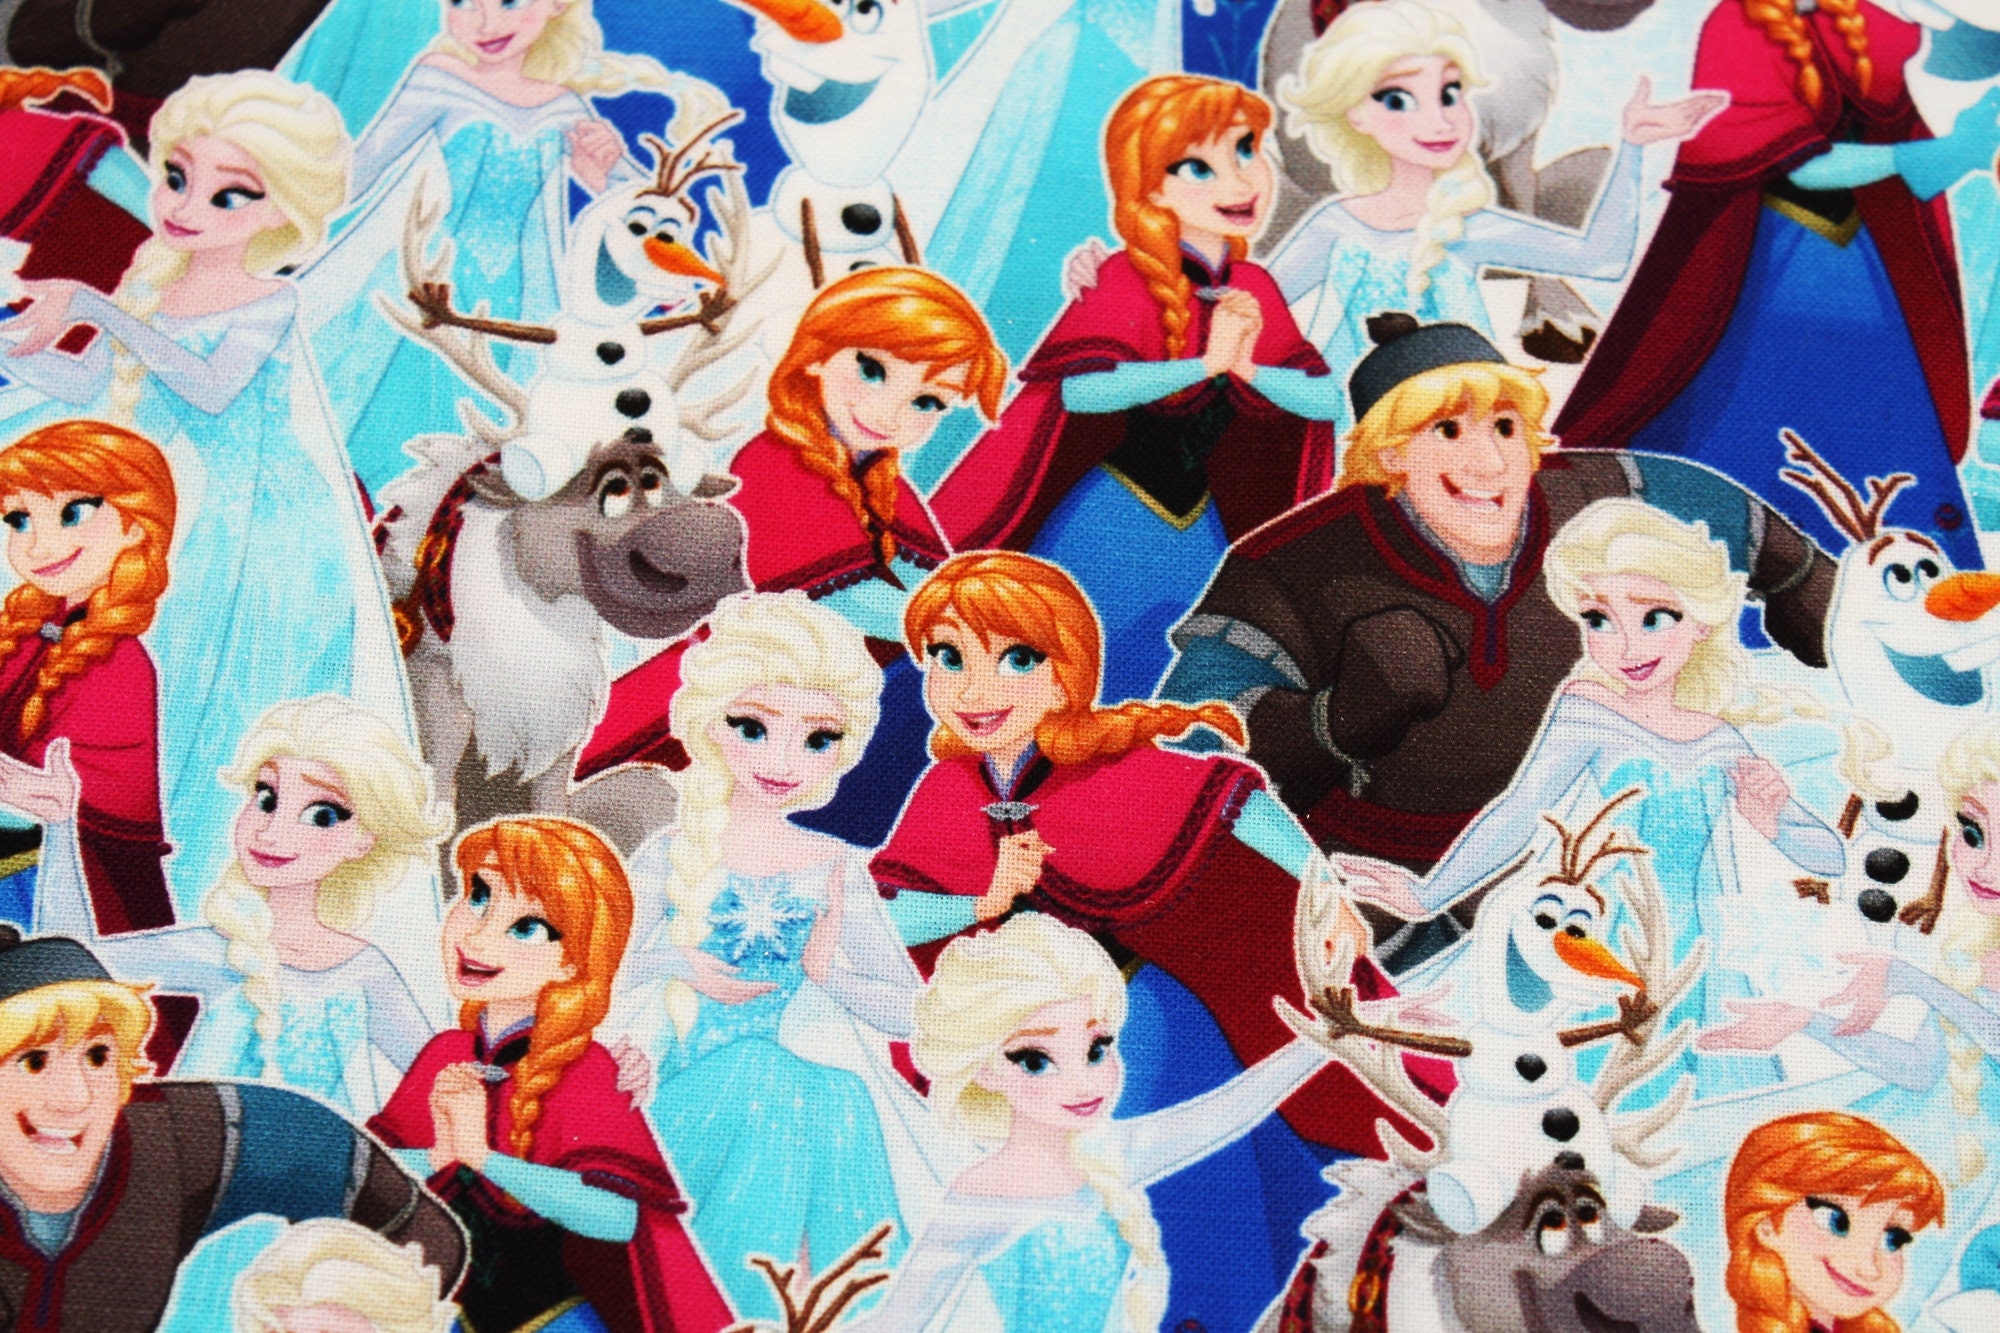 Disney Frozen Elsa Anna Olaf Kristoff Sven Fabric Printed in | Etsy